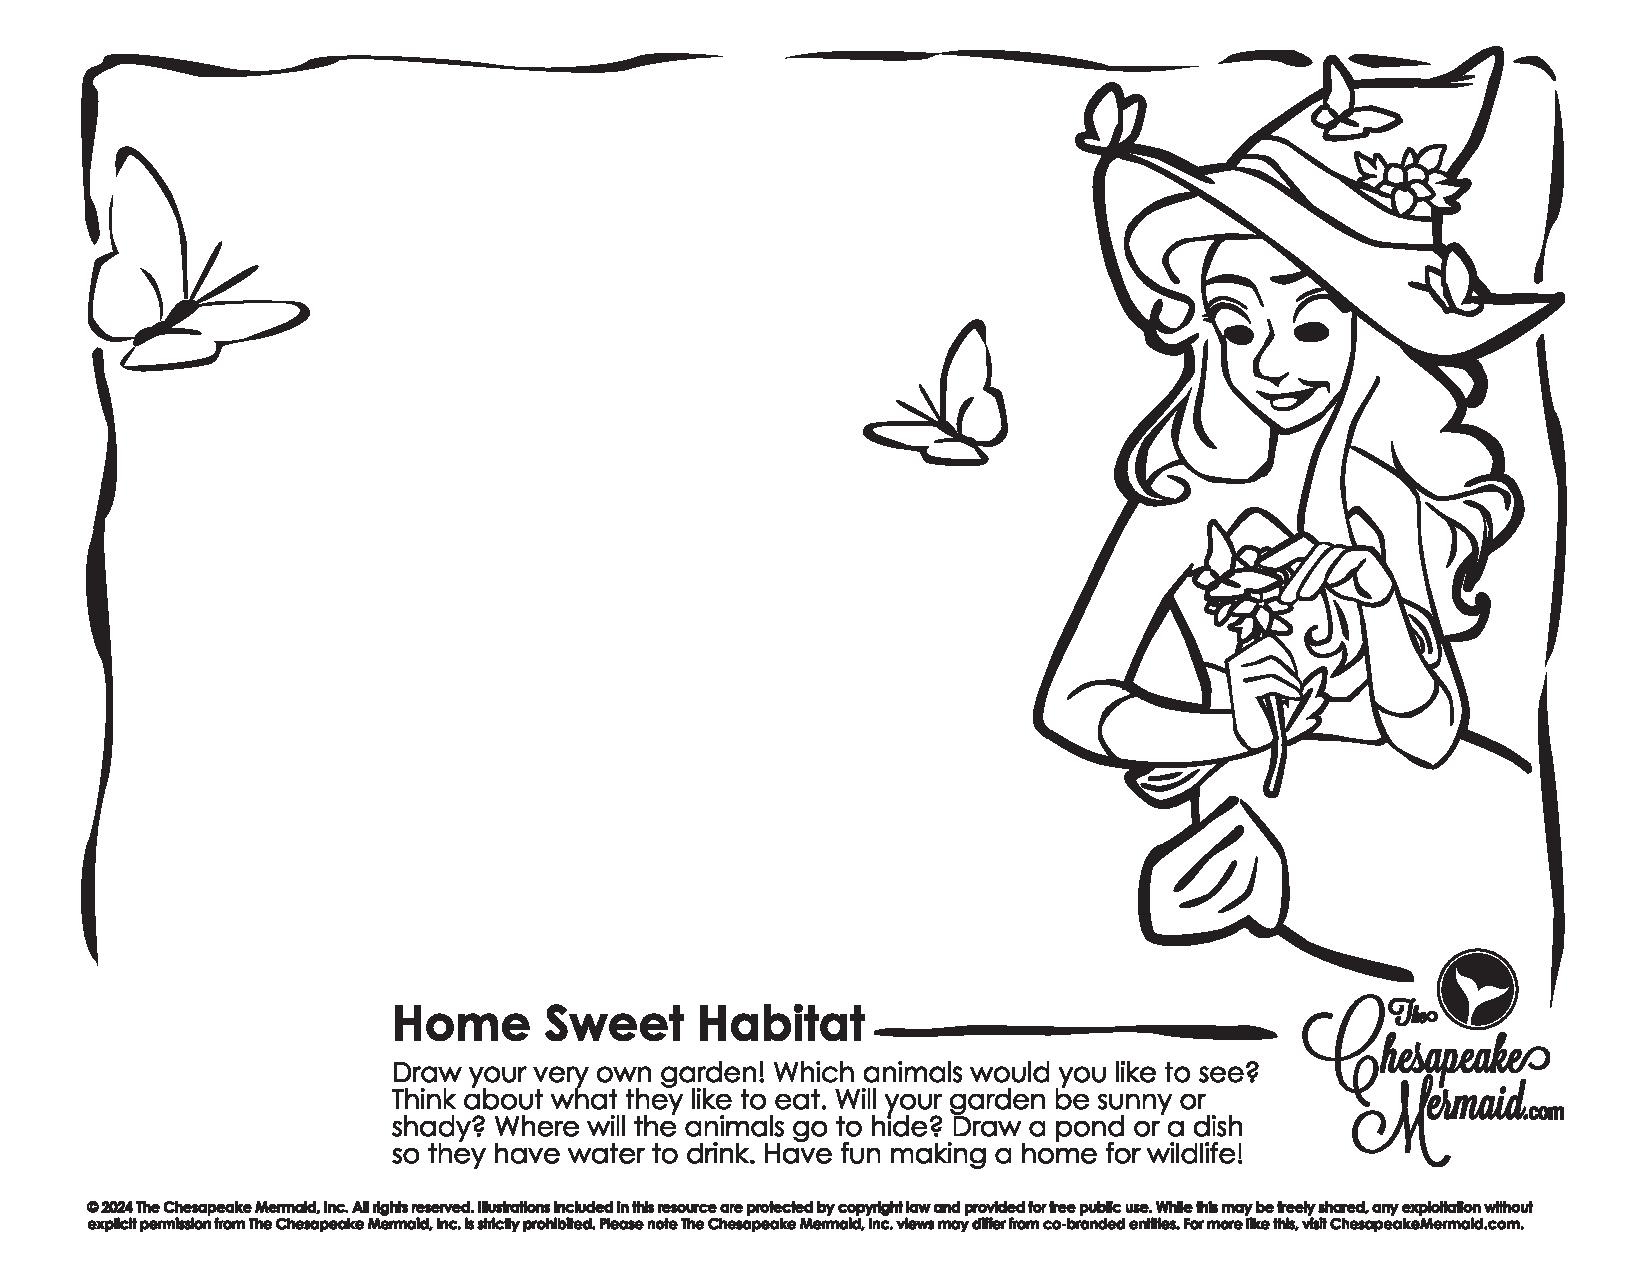 Home Sweet Habitat!